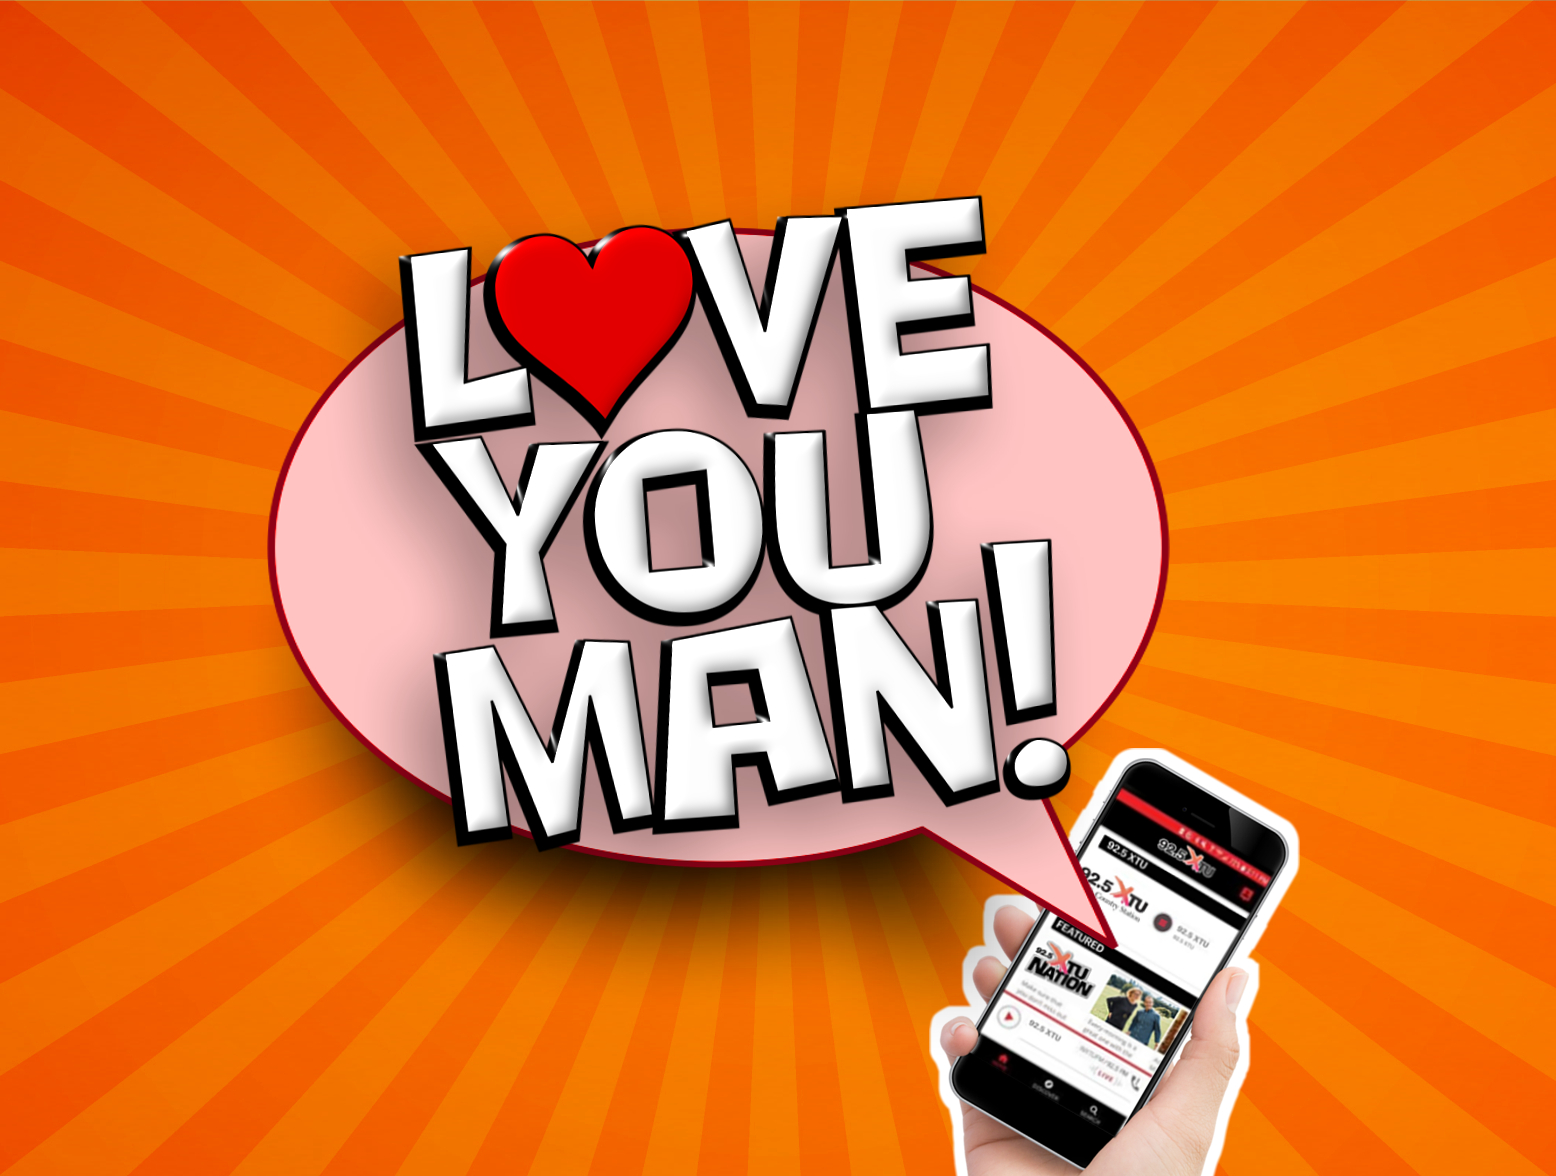 NEW: Love You Man - Karaoke